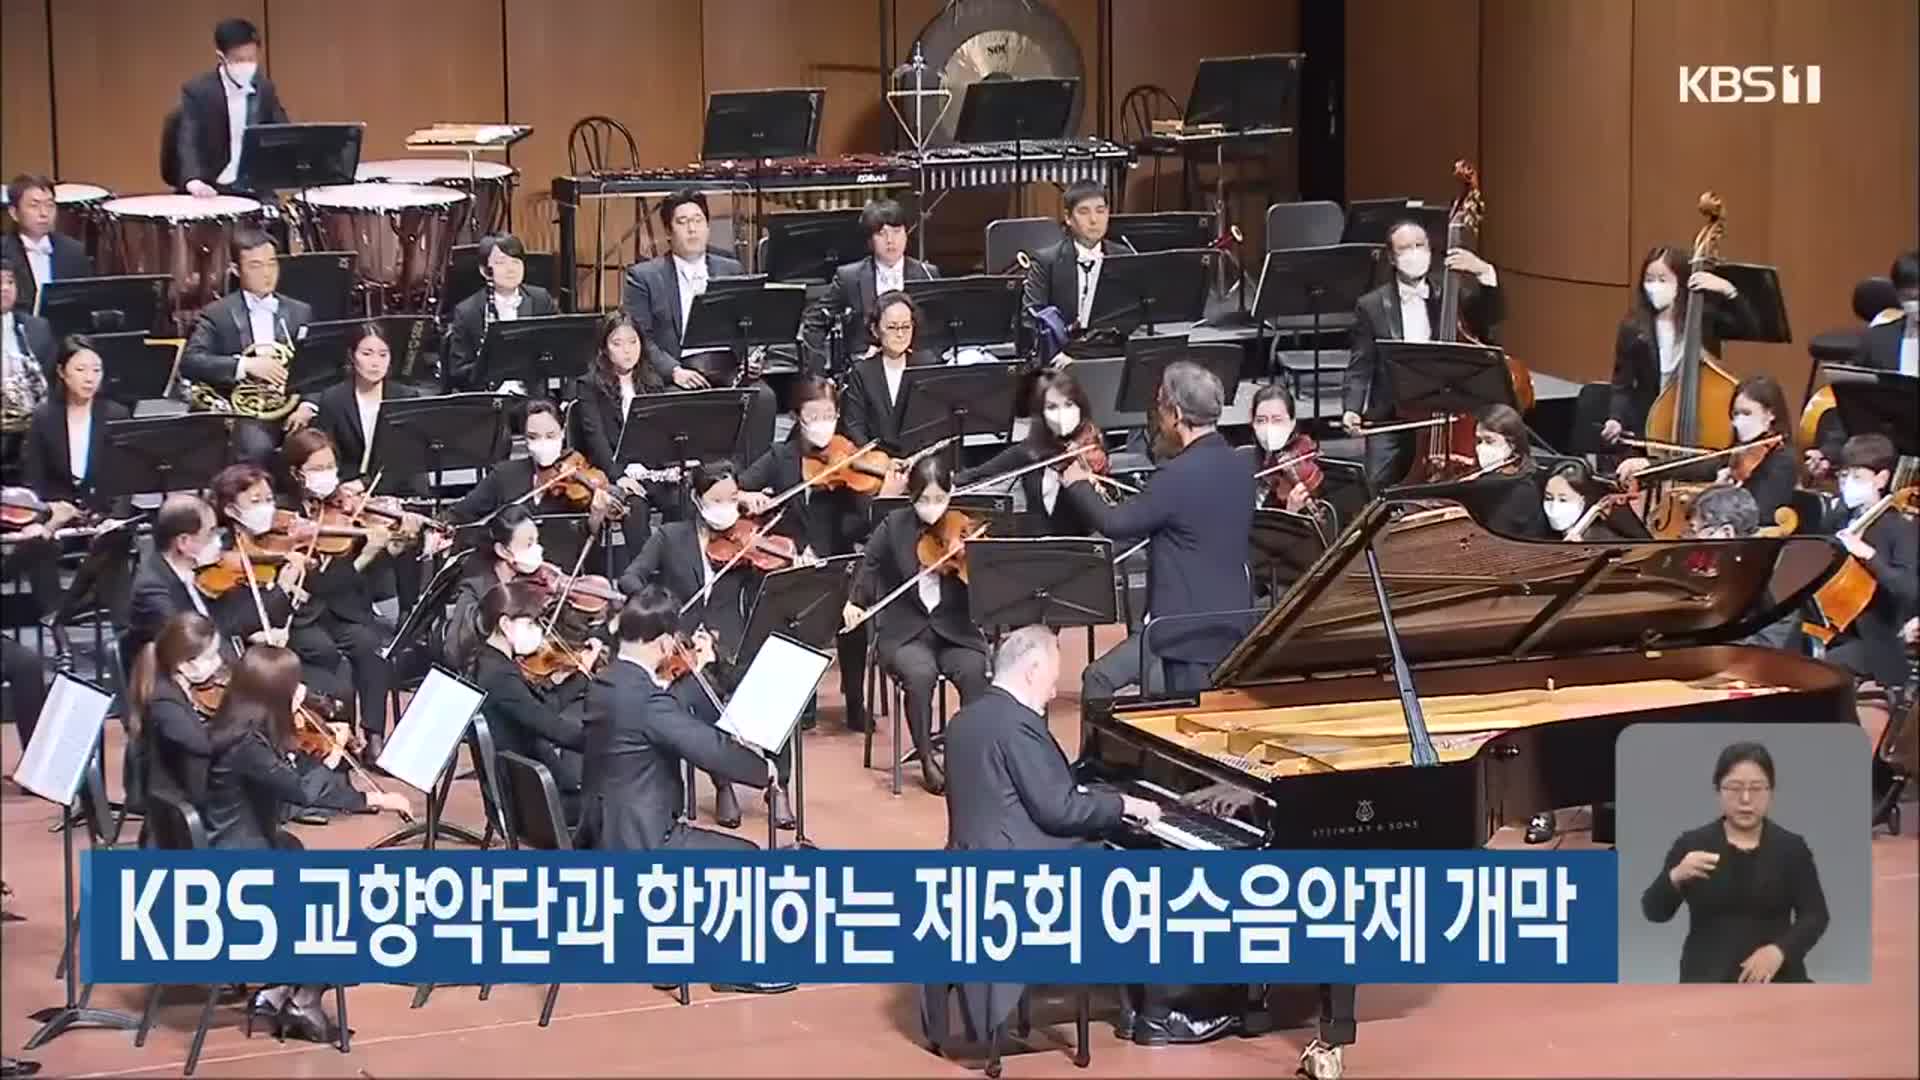 KBS 교향악단과 함께하는 제5회 여수음악제 개막